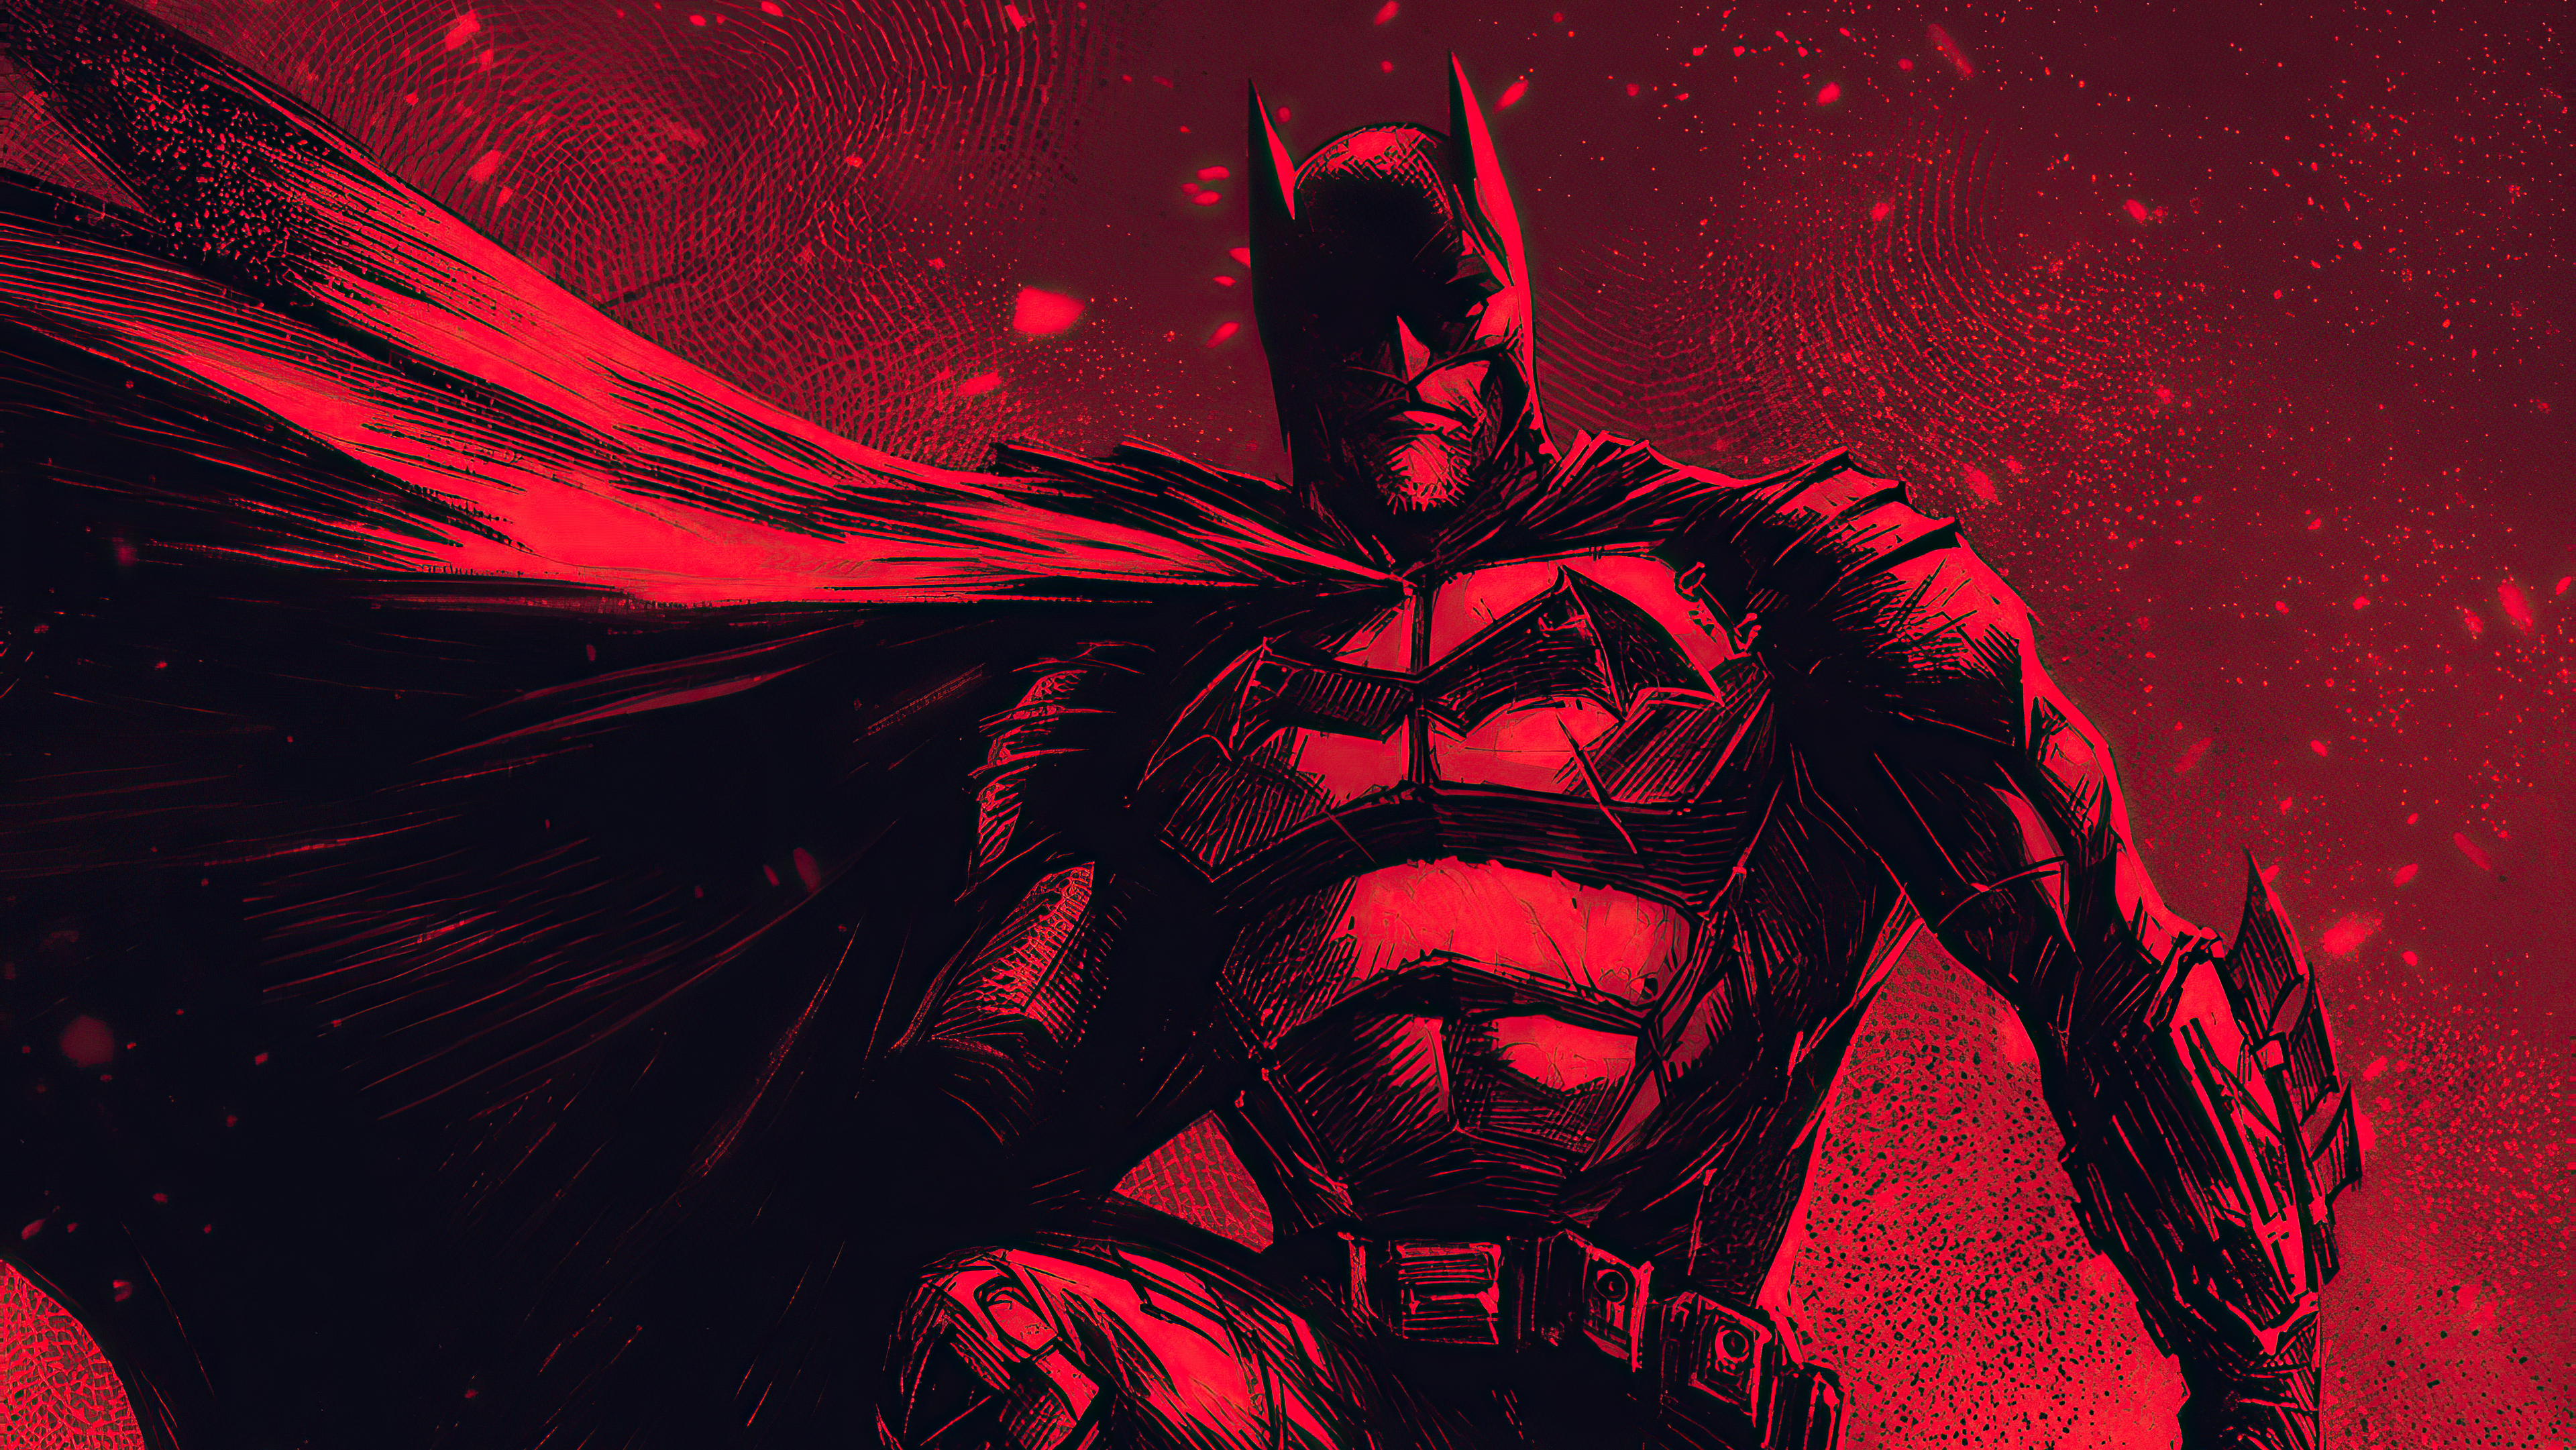 The Batman Red 4k 2020, HD Superheroes, 4k Wallpapers, Images